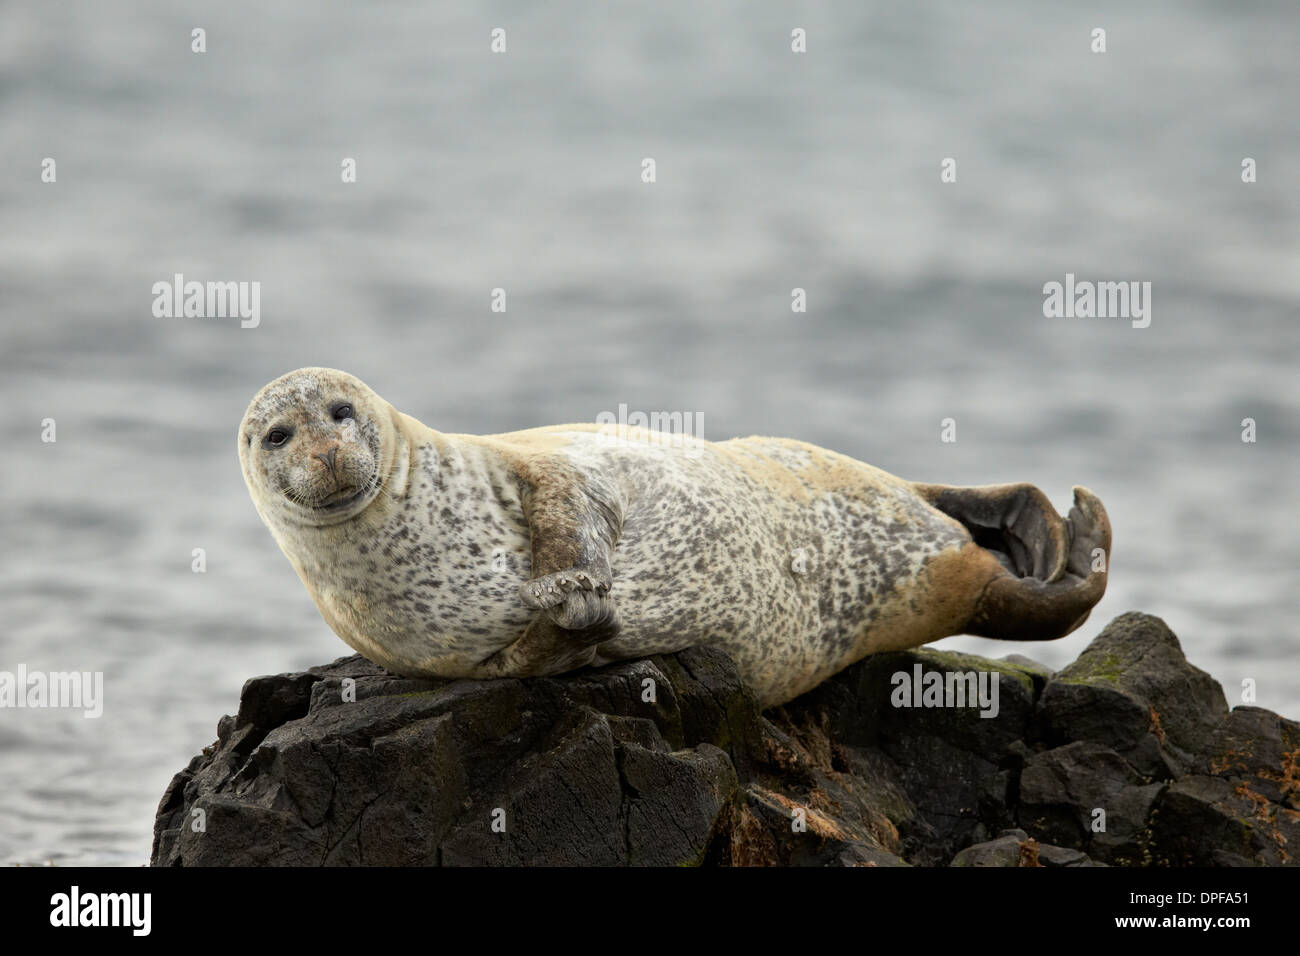 Harbor seal (common seal) (Phoca vitulina), Iceland, Polar Regions Stock Photo